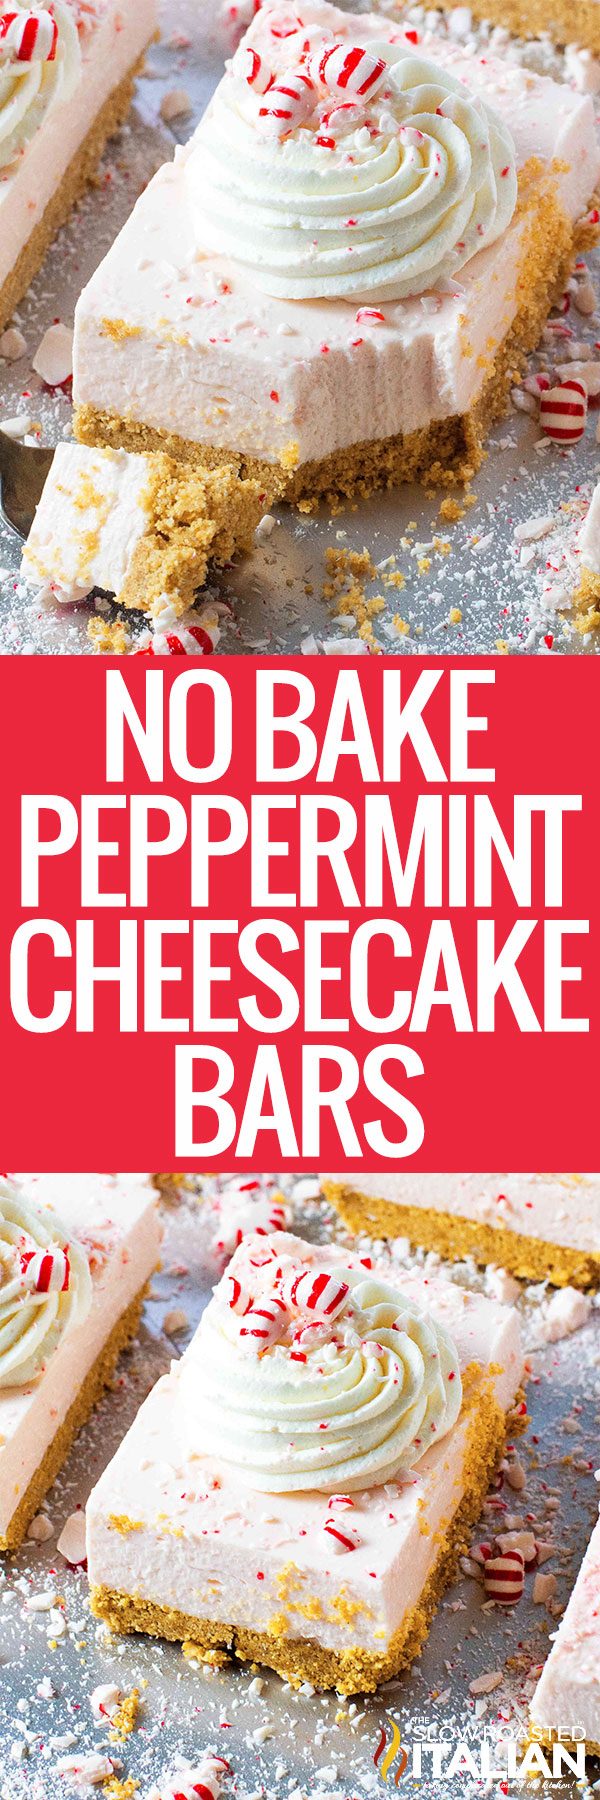 No-Bake Peppermint Cheesecake Bars + Video - The Slow Roasted Italian